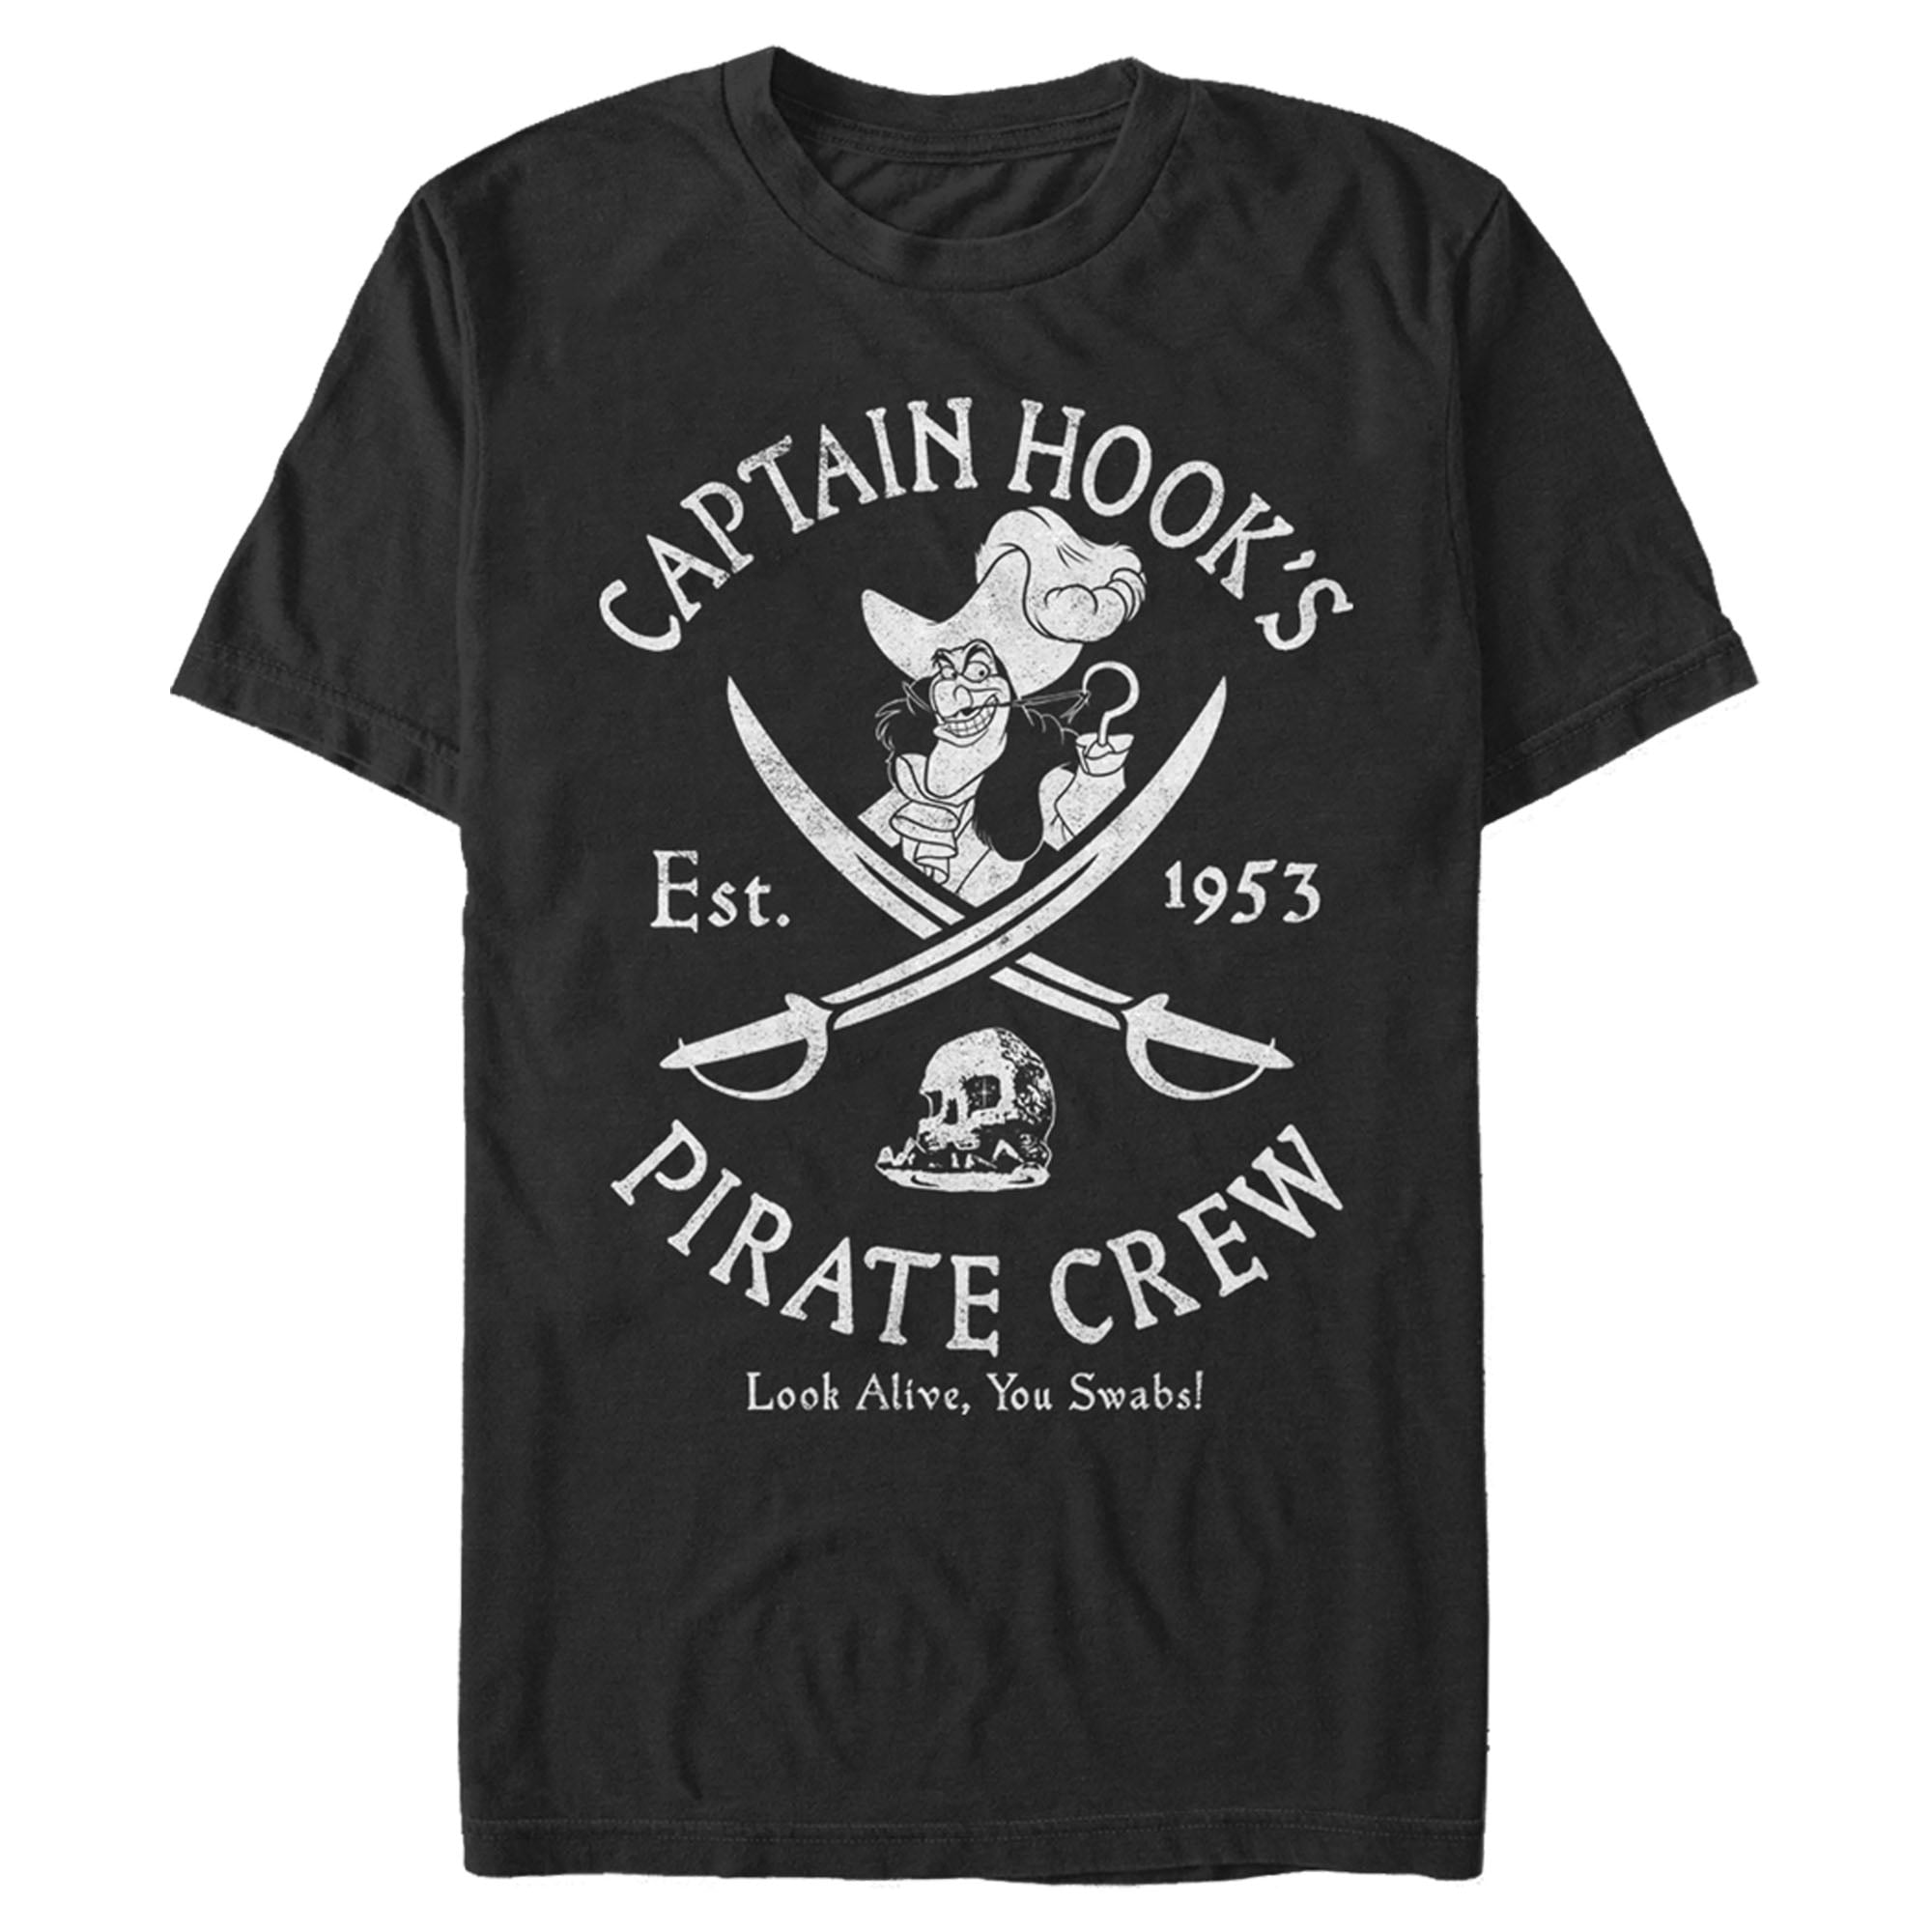 Men's Peter Pan Captain Hook's Pirate Crew Graphic Tee Black 3X Large 